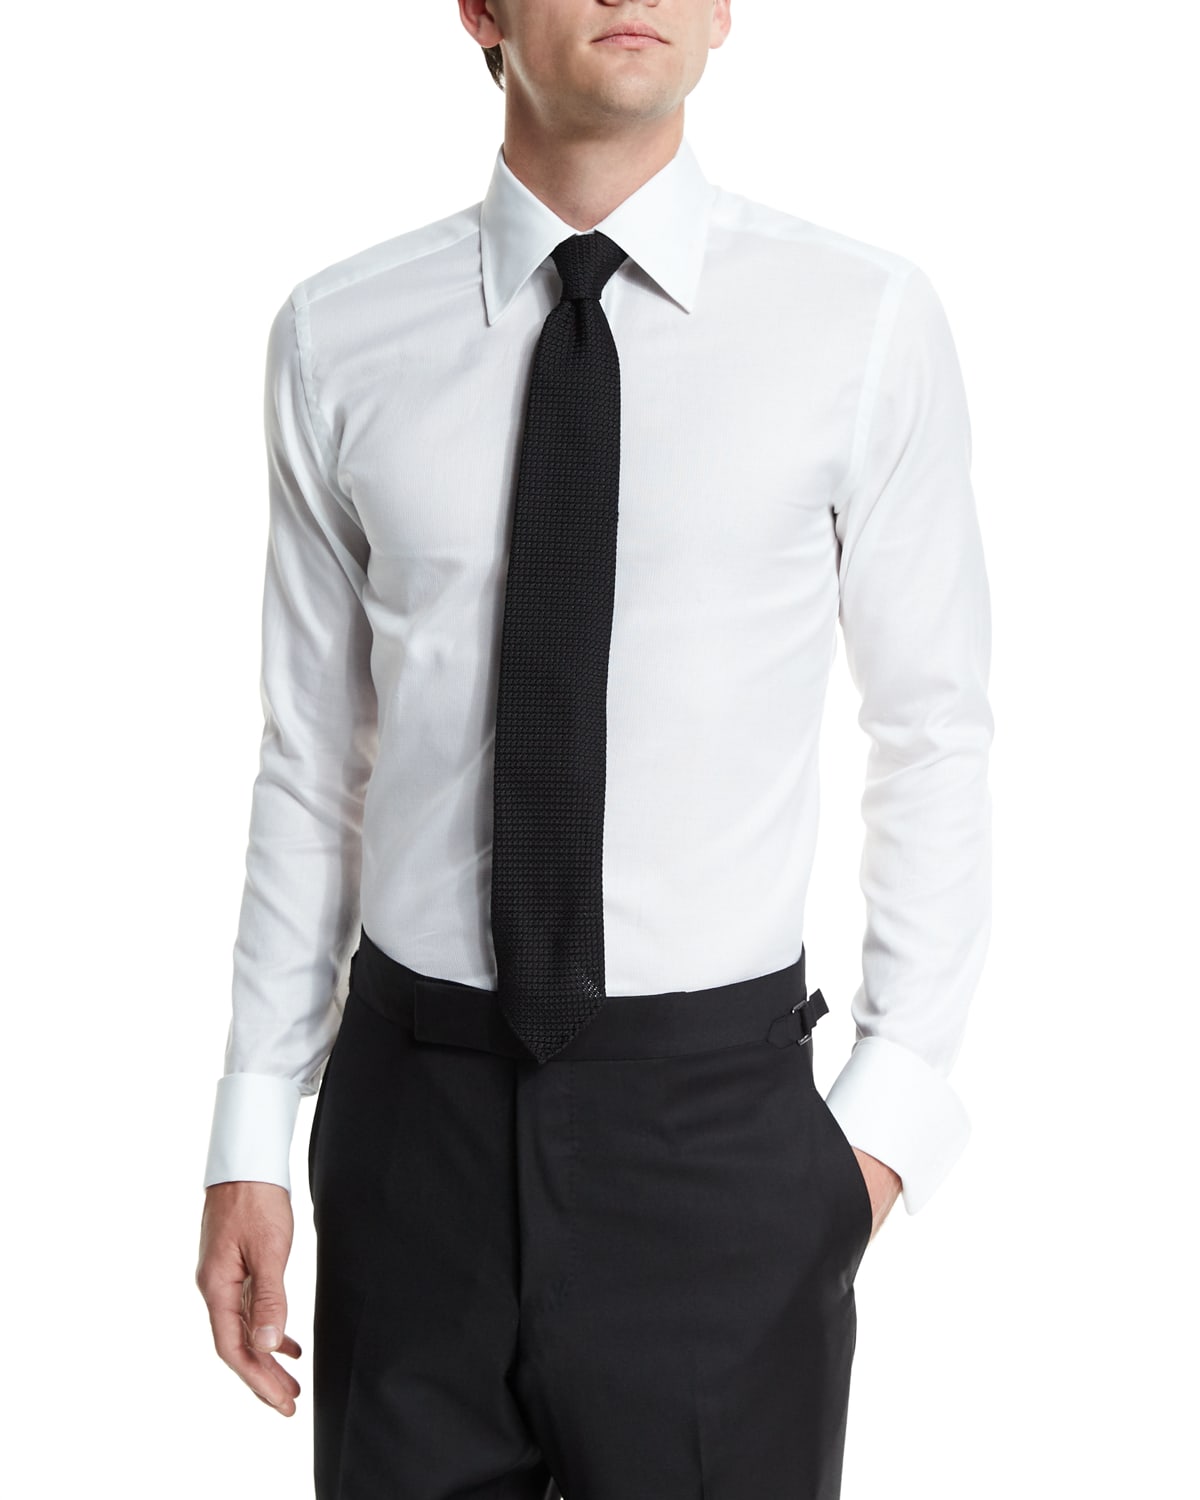 TOM FORD Classic French-Cuff Slim-Fit Dress Shirt, White